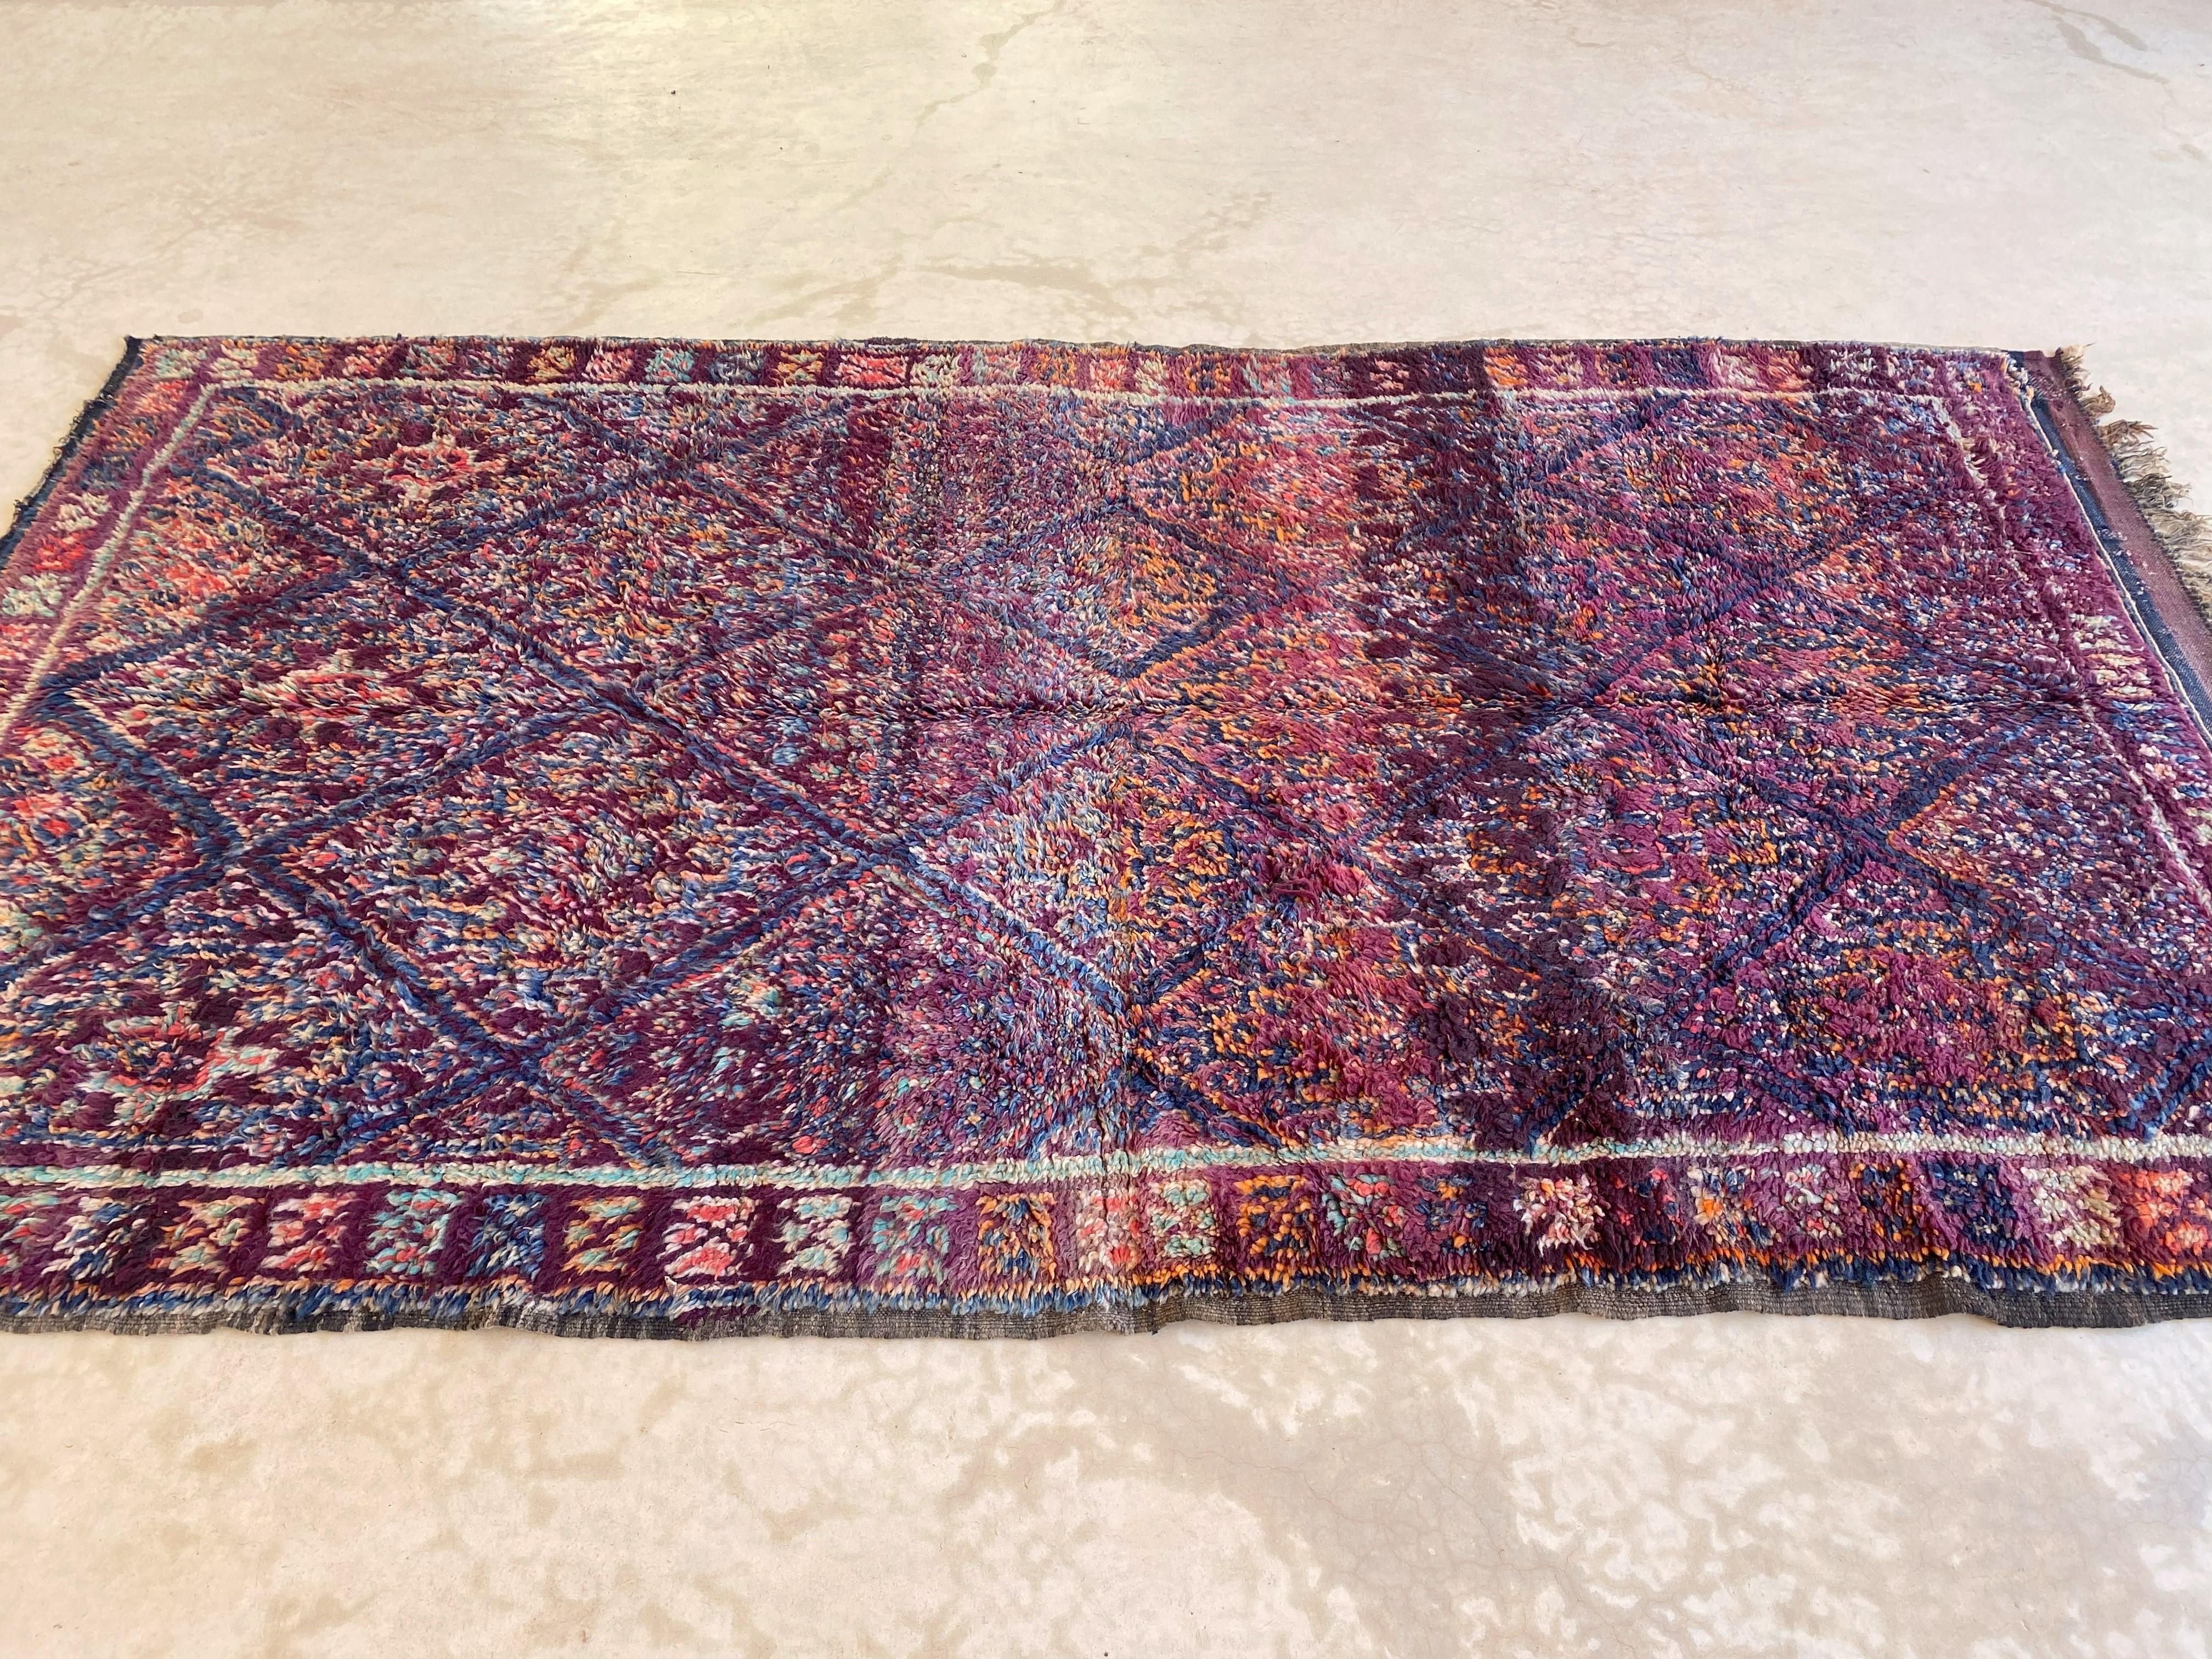 Tribal Vintage Moroccan Beni Mguild rug - Purple/blue - 5.8x10.4feet / 176x317cm For Sale